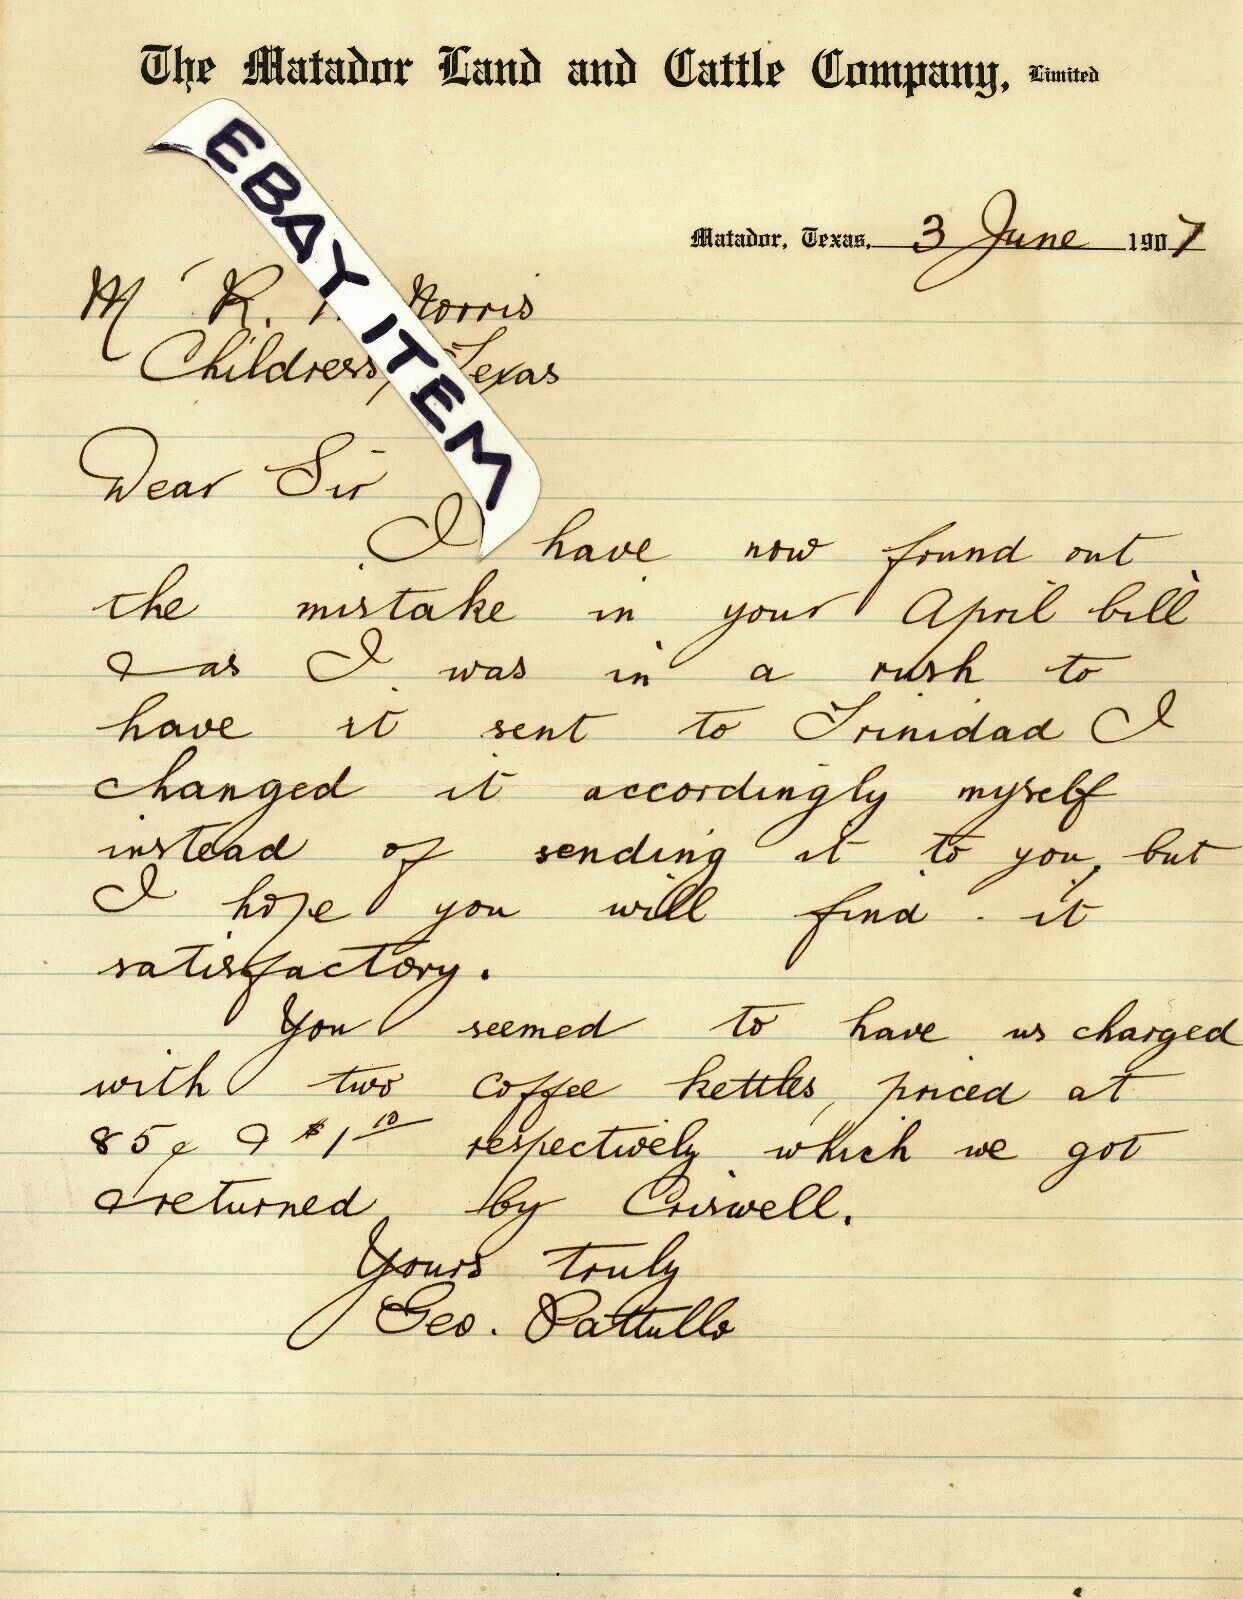 1907 writer GEORGE PATTULLO letterhead TEXAS MATADOR LAND and CATTLE COMPANY